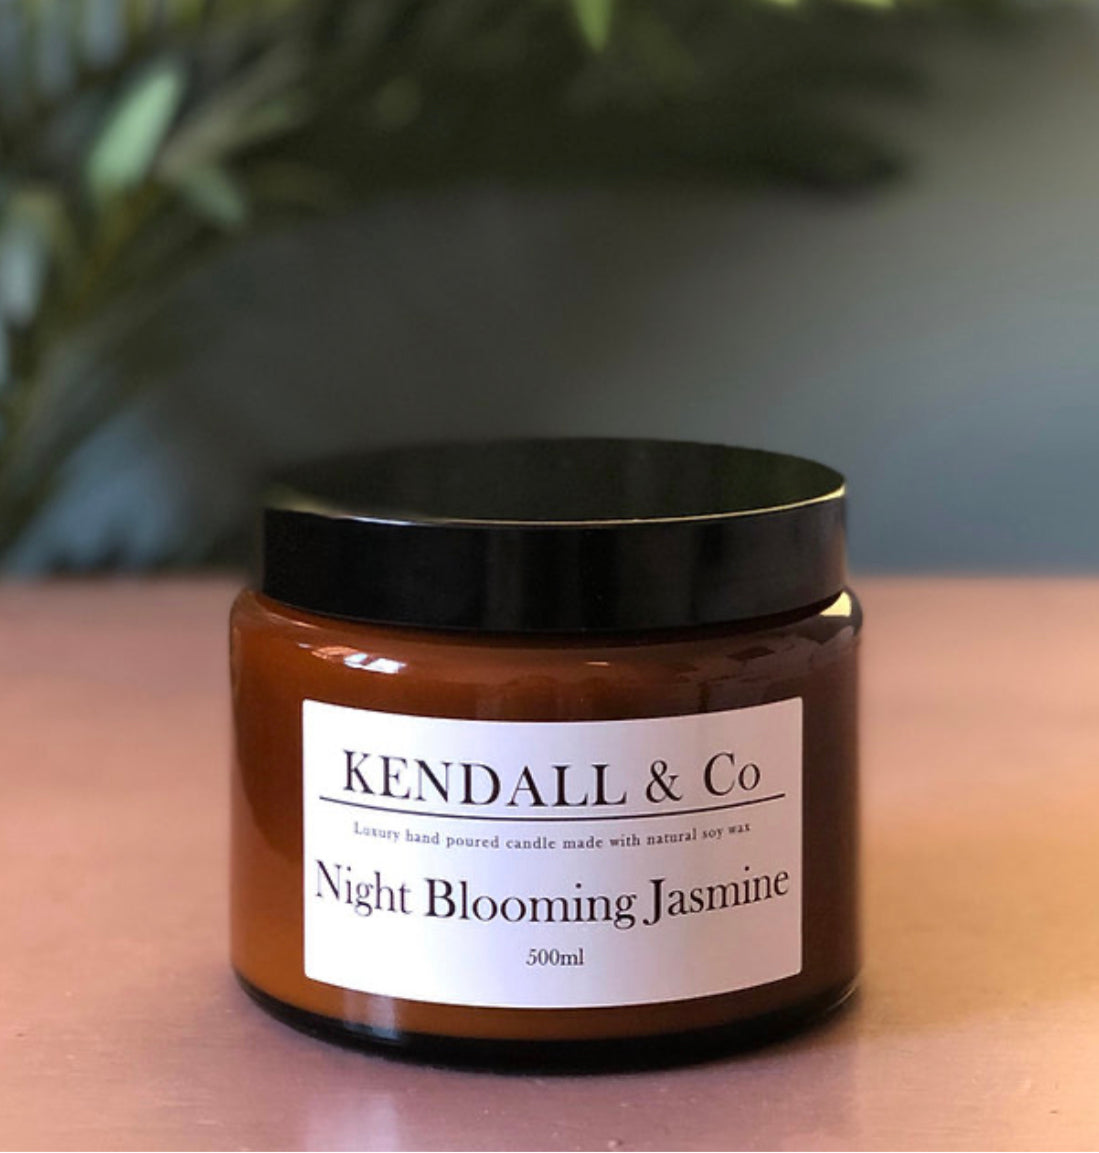 Night Blooming Jasmine Soy Wax Candle